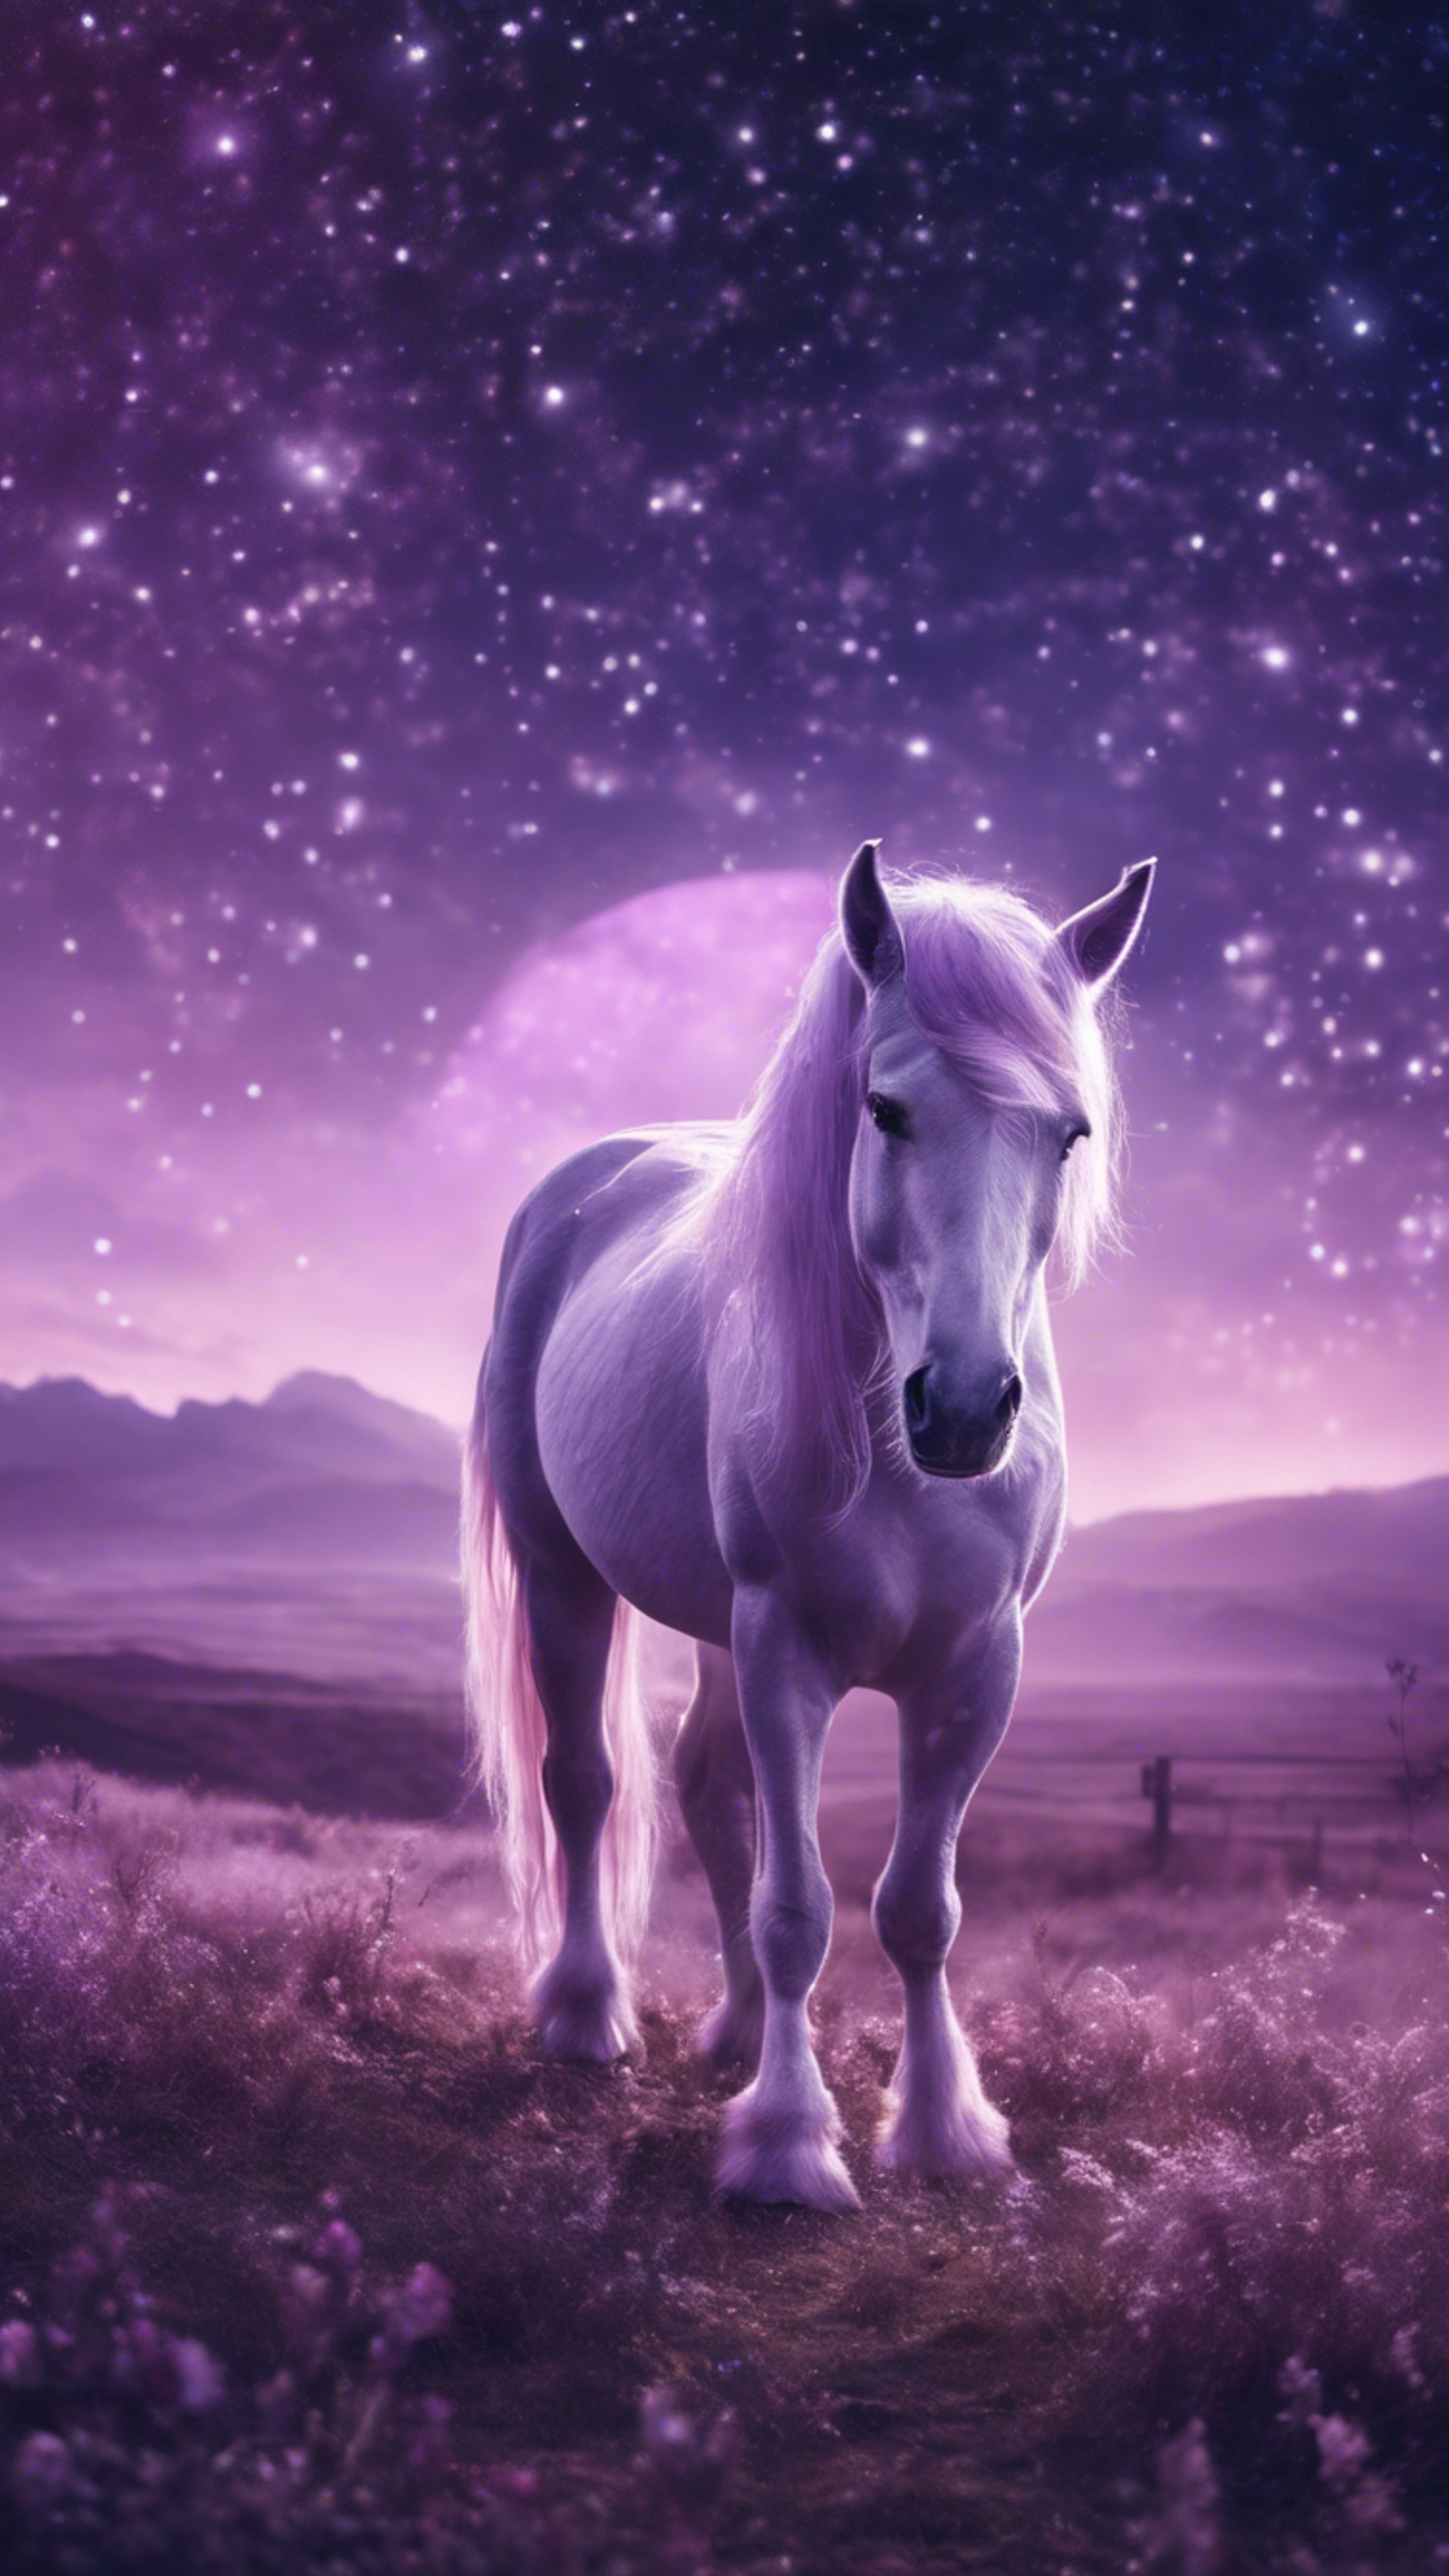 A light purple unicorn grazing in a mystical landscape under the starry night. ورق الجدران[ebdebf087ad14a189ba8]